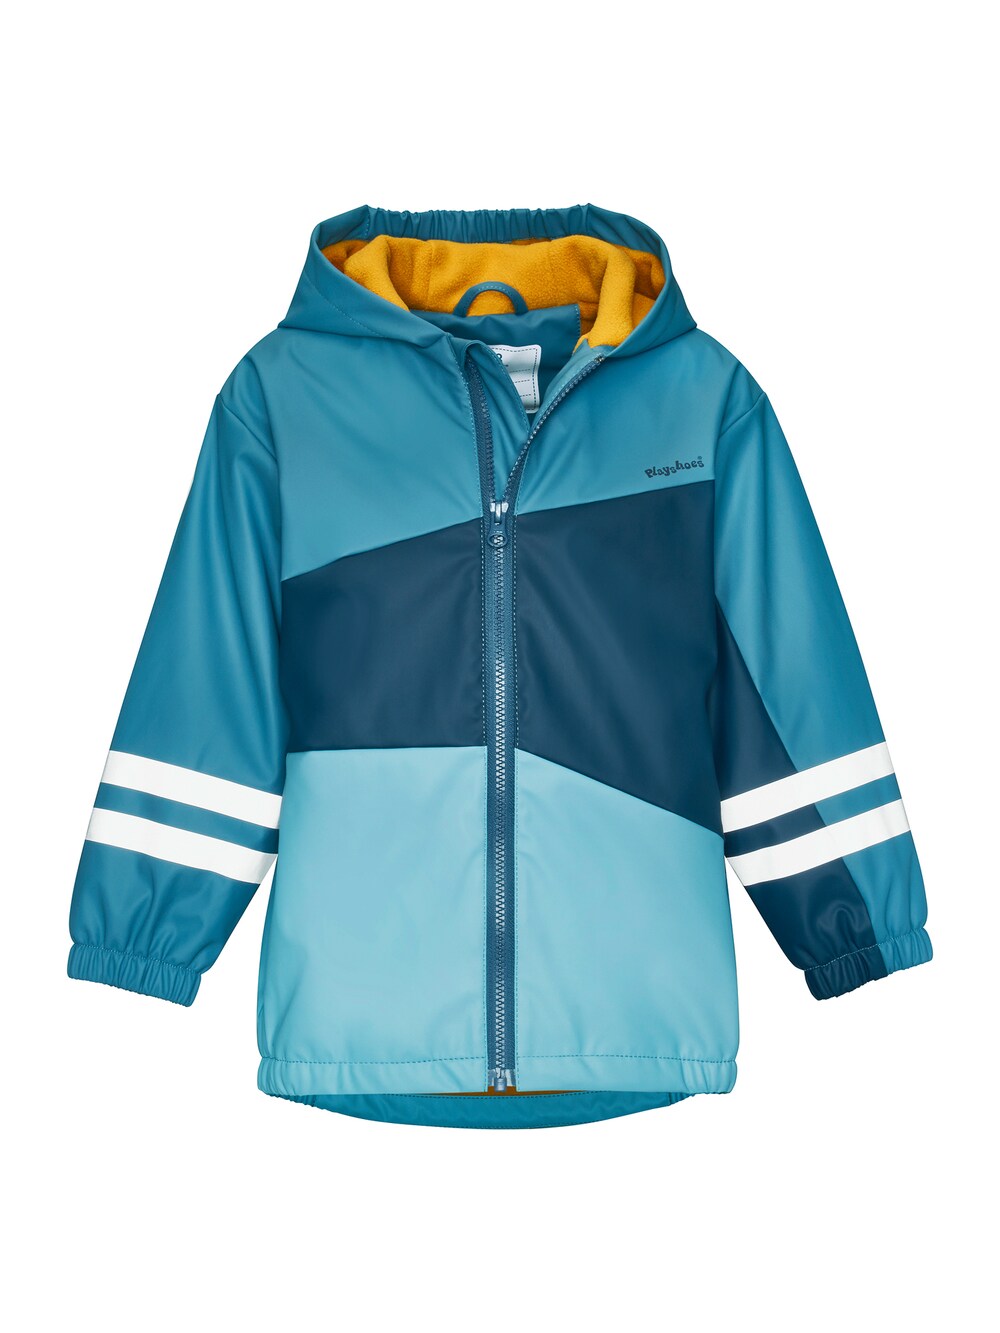 цена Спортивная куртка PLAYSHOES, синий/морской синий/голубой